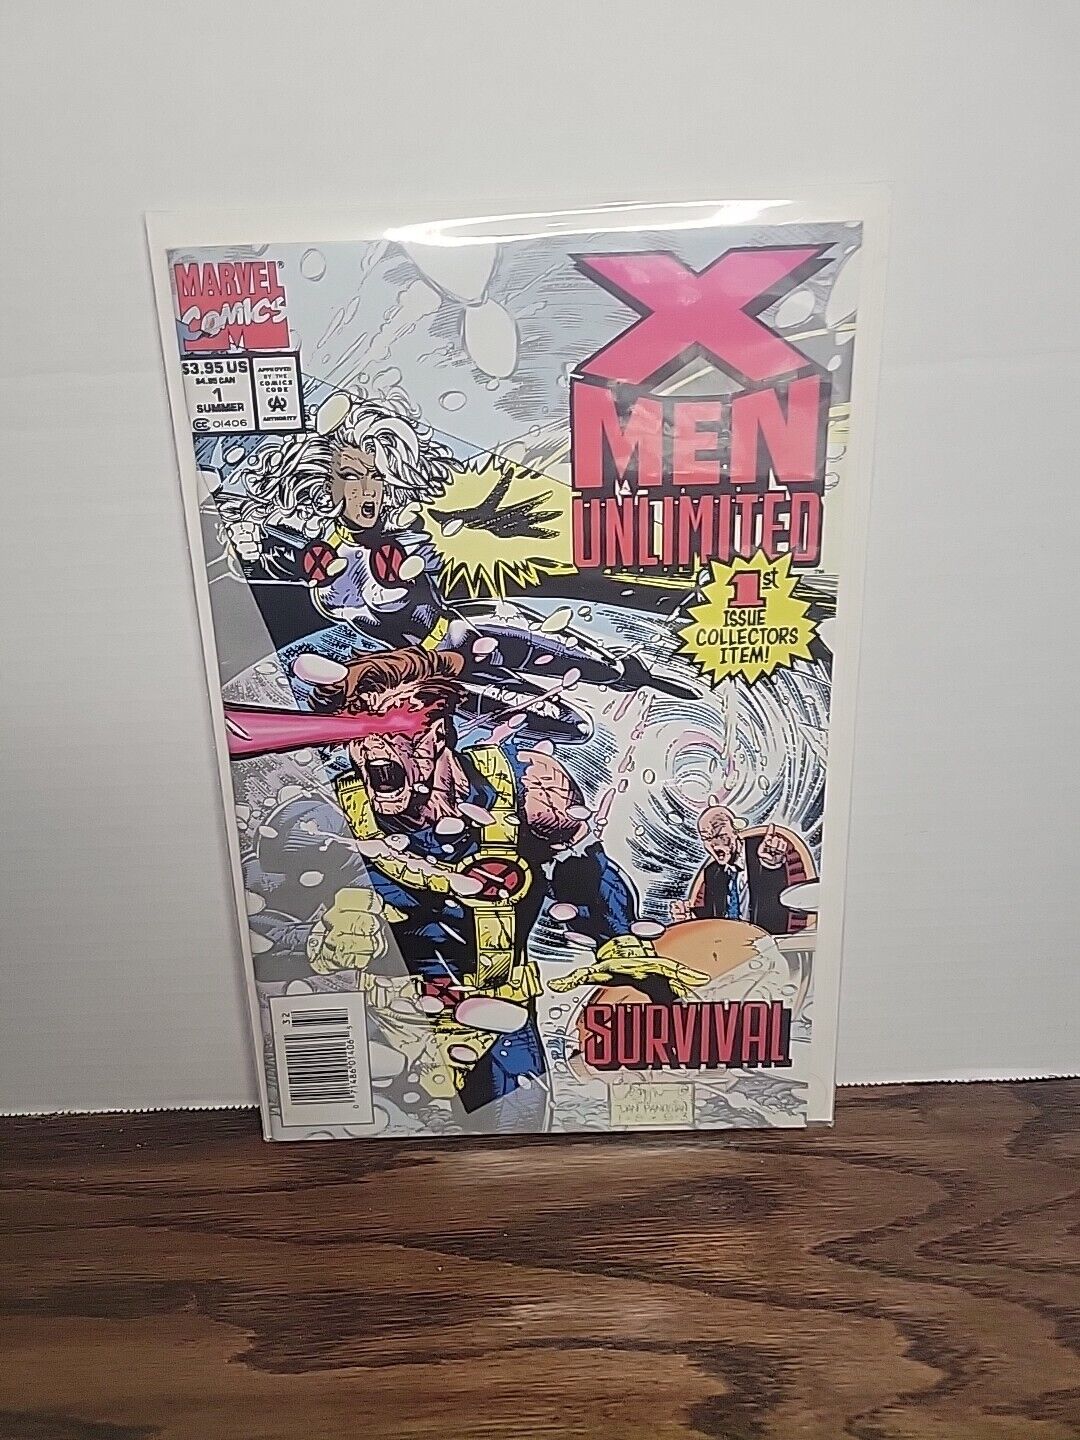 X-MEN UNLIMITED #1 (JUN 1993, MARVEL) CGC READY 1ST ISSUE 